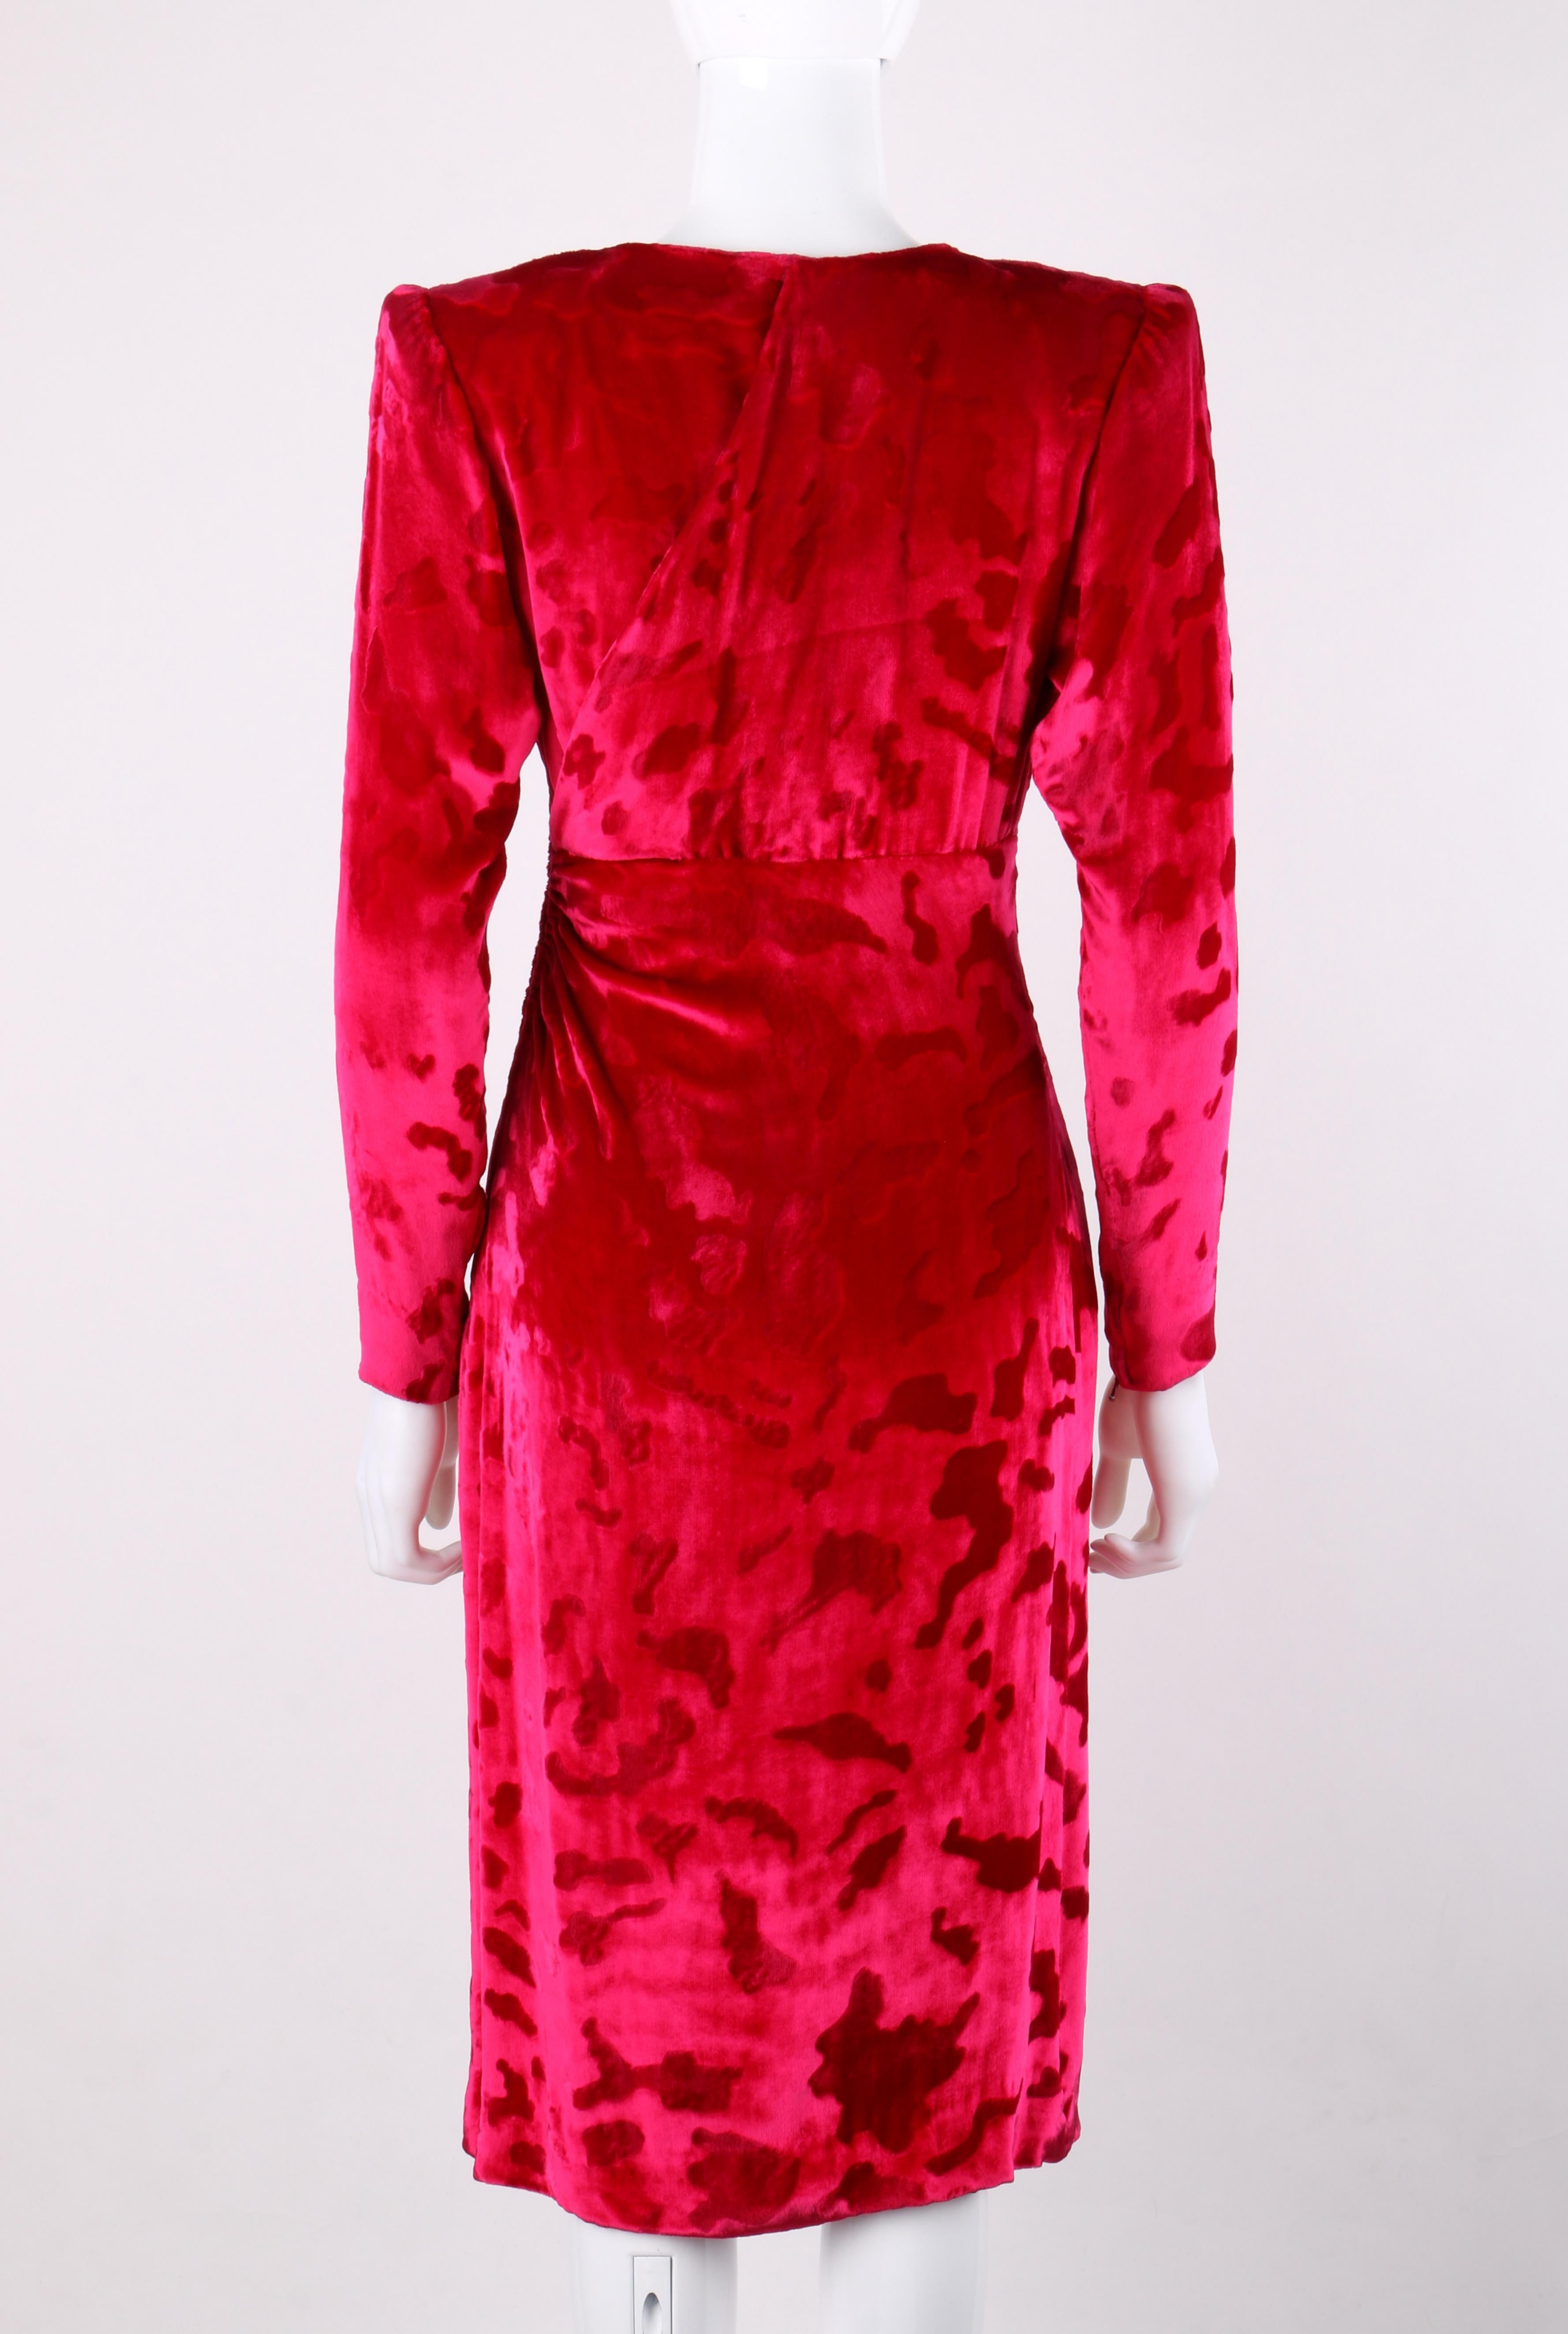 GIVENCHY c.1990's Haute Couture Fuchsia Pink Leopard Print Velvet Evening Dress For Sale 1